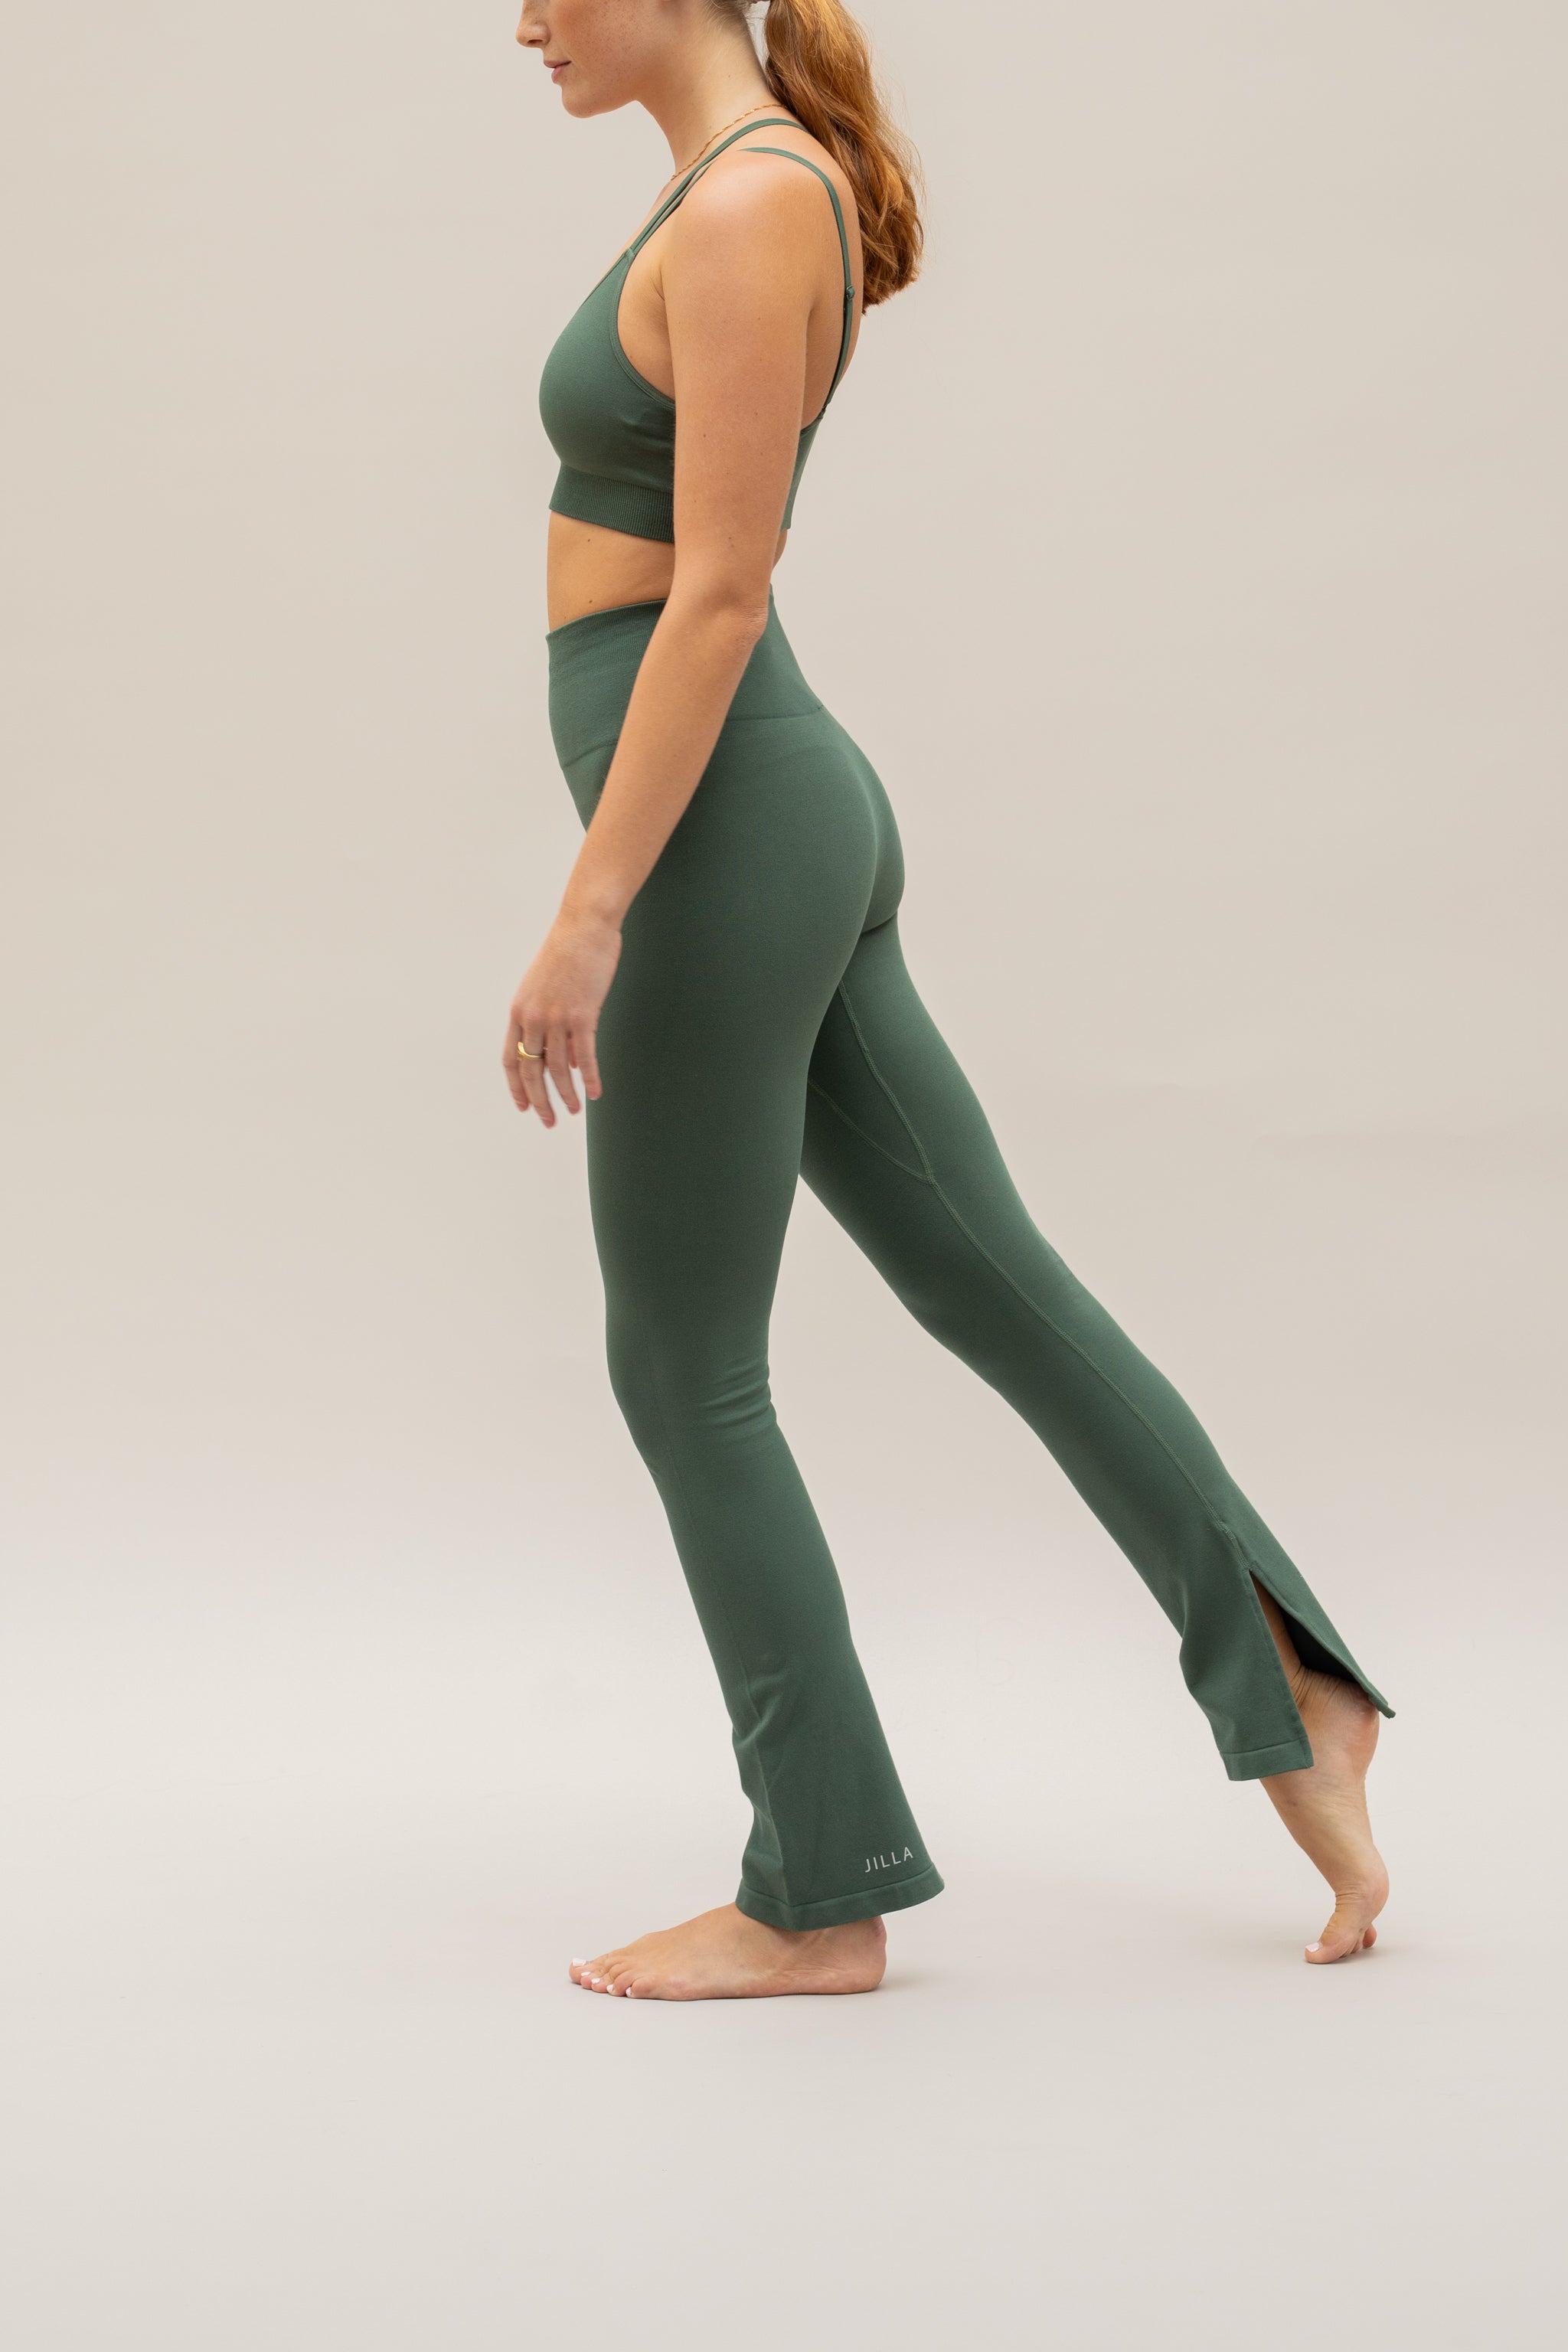 EHQJNJ Yoga Pants Flared Women's Paddystripes Good Luck Green